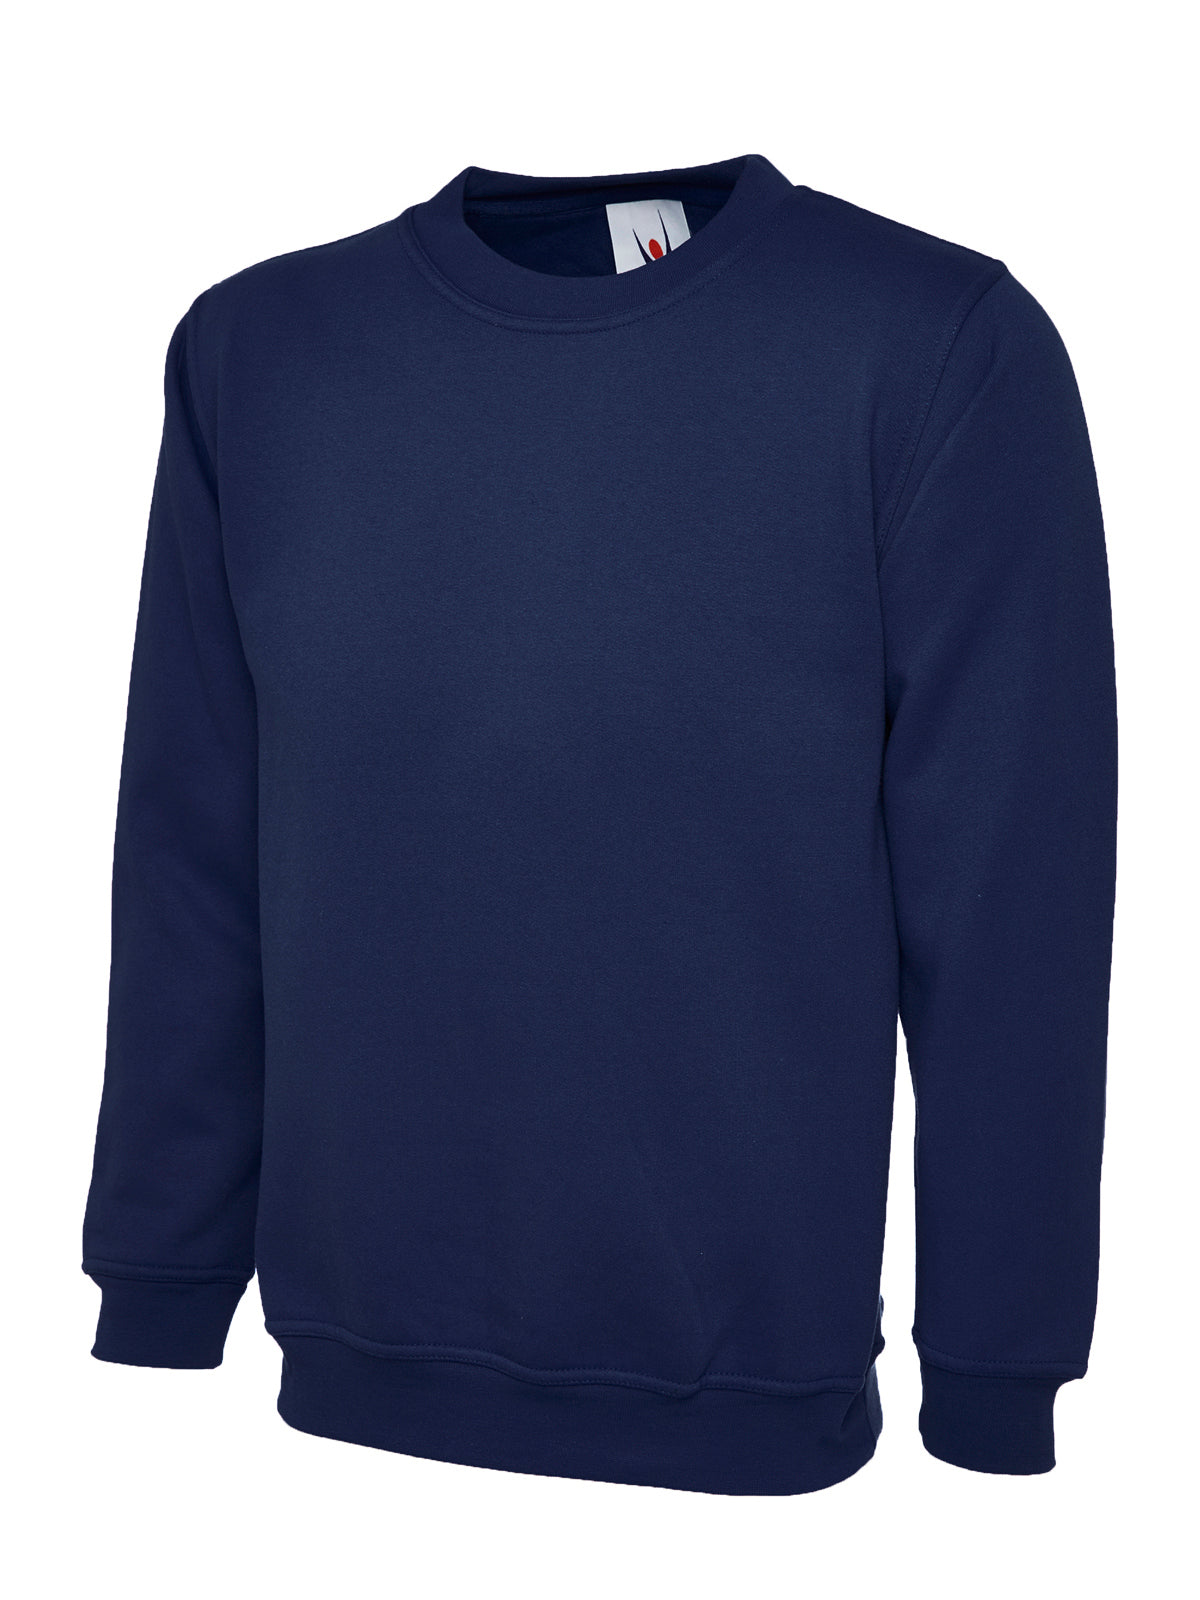 Uneek Premium Unisex Sweatshirt UC201 - French Navy